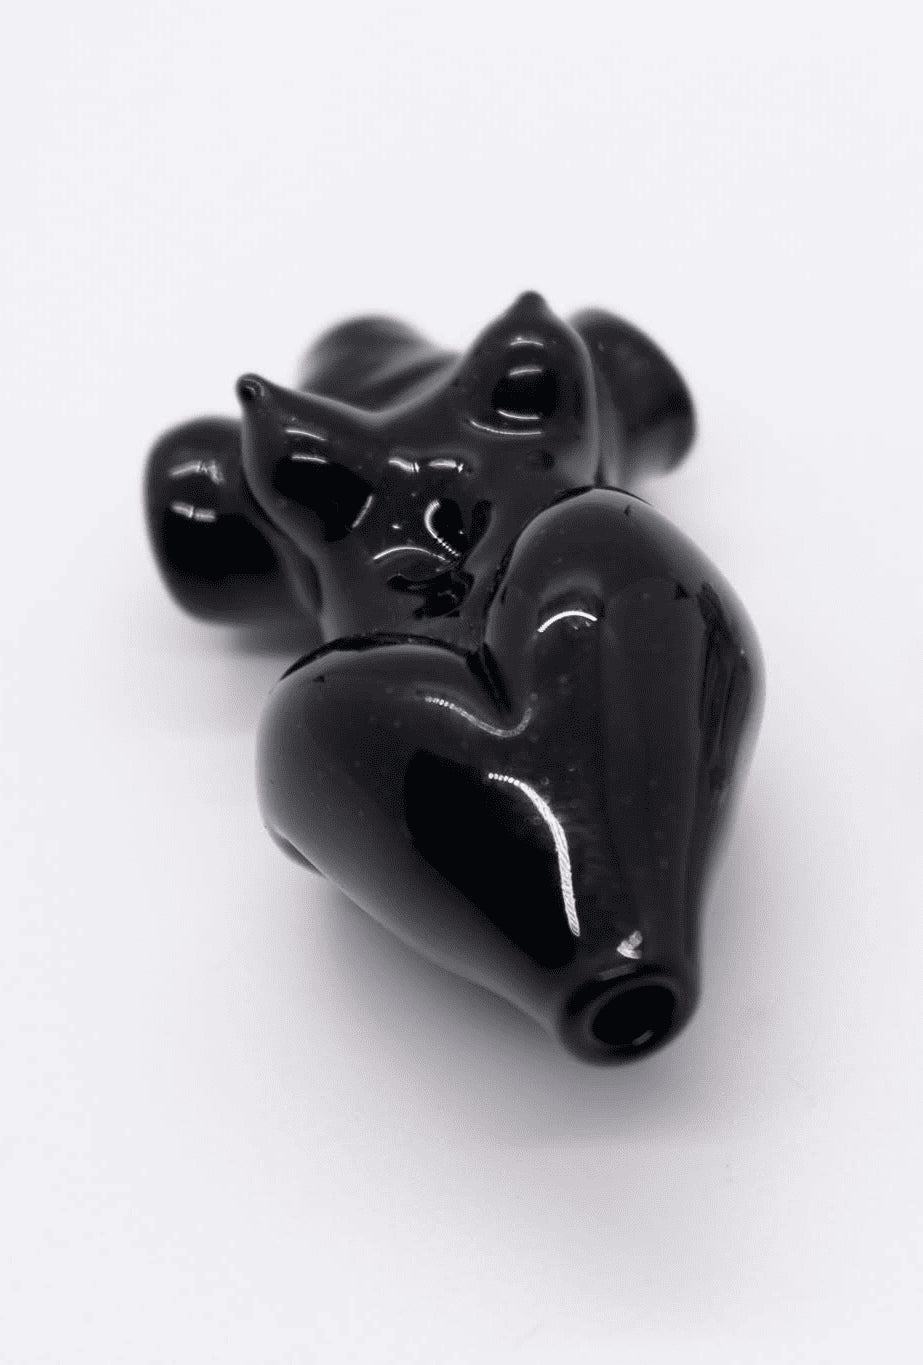 luxurious glass pendant - Black Galaxy Carb Cap Torso Pendant by KT Scissorbaby